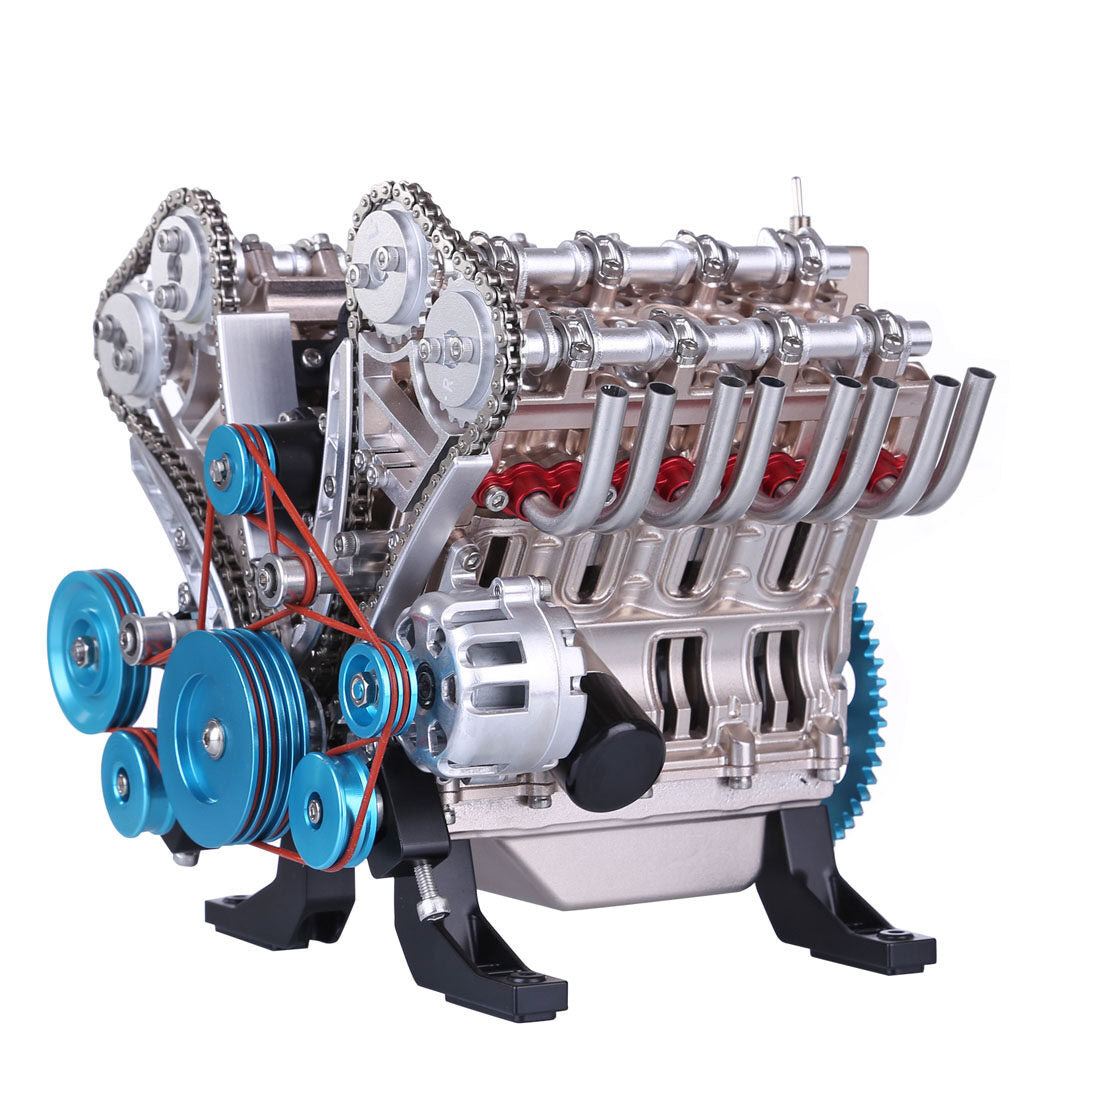 TECHING 500+ Teile 1:3 V8 Motor Modell Bausatz, Metall-Mechanik Motor Experiment Physik Spielzeug 5